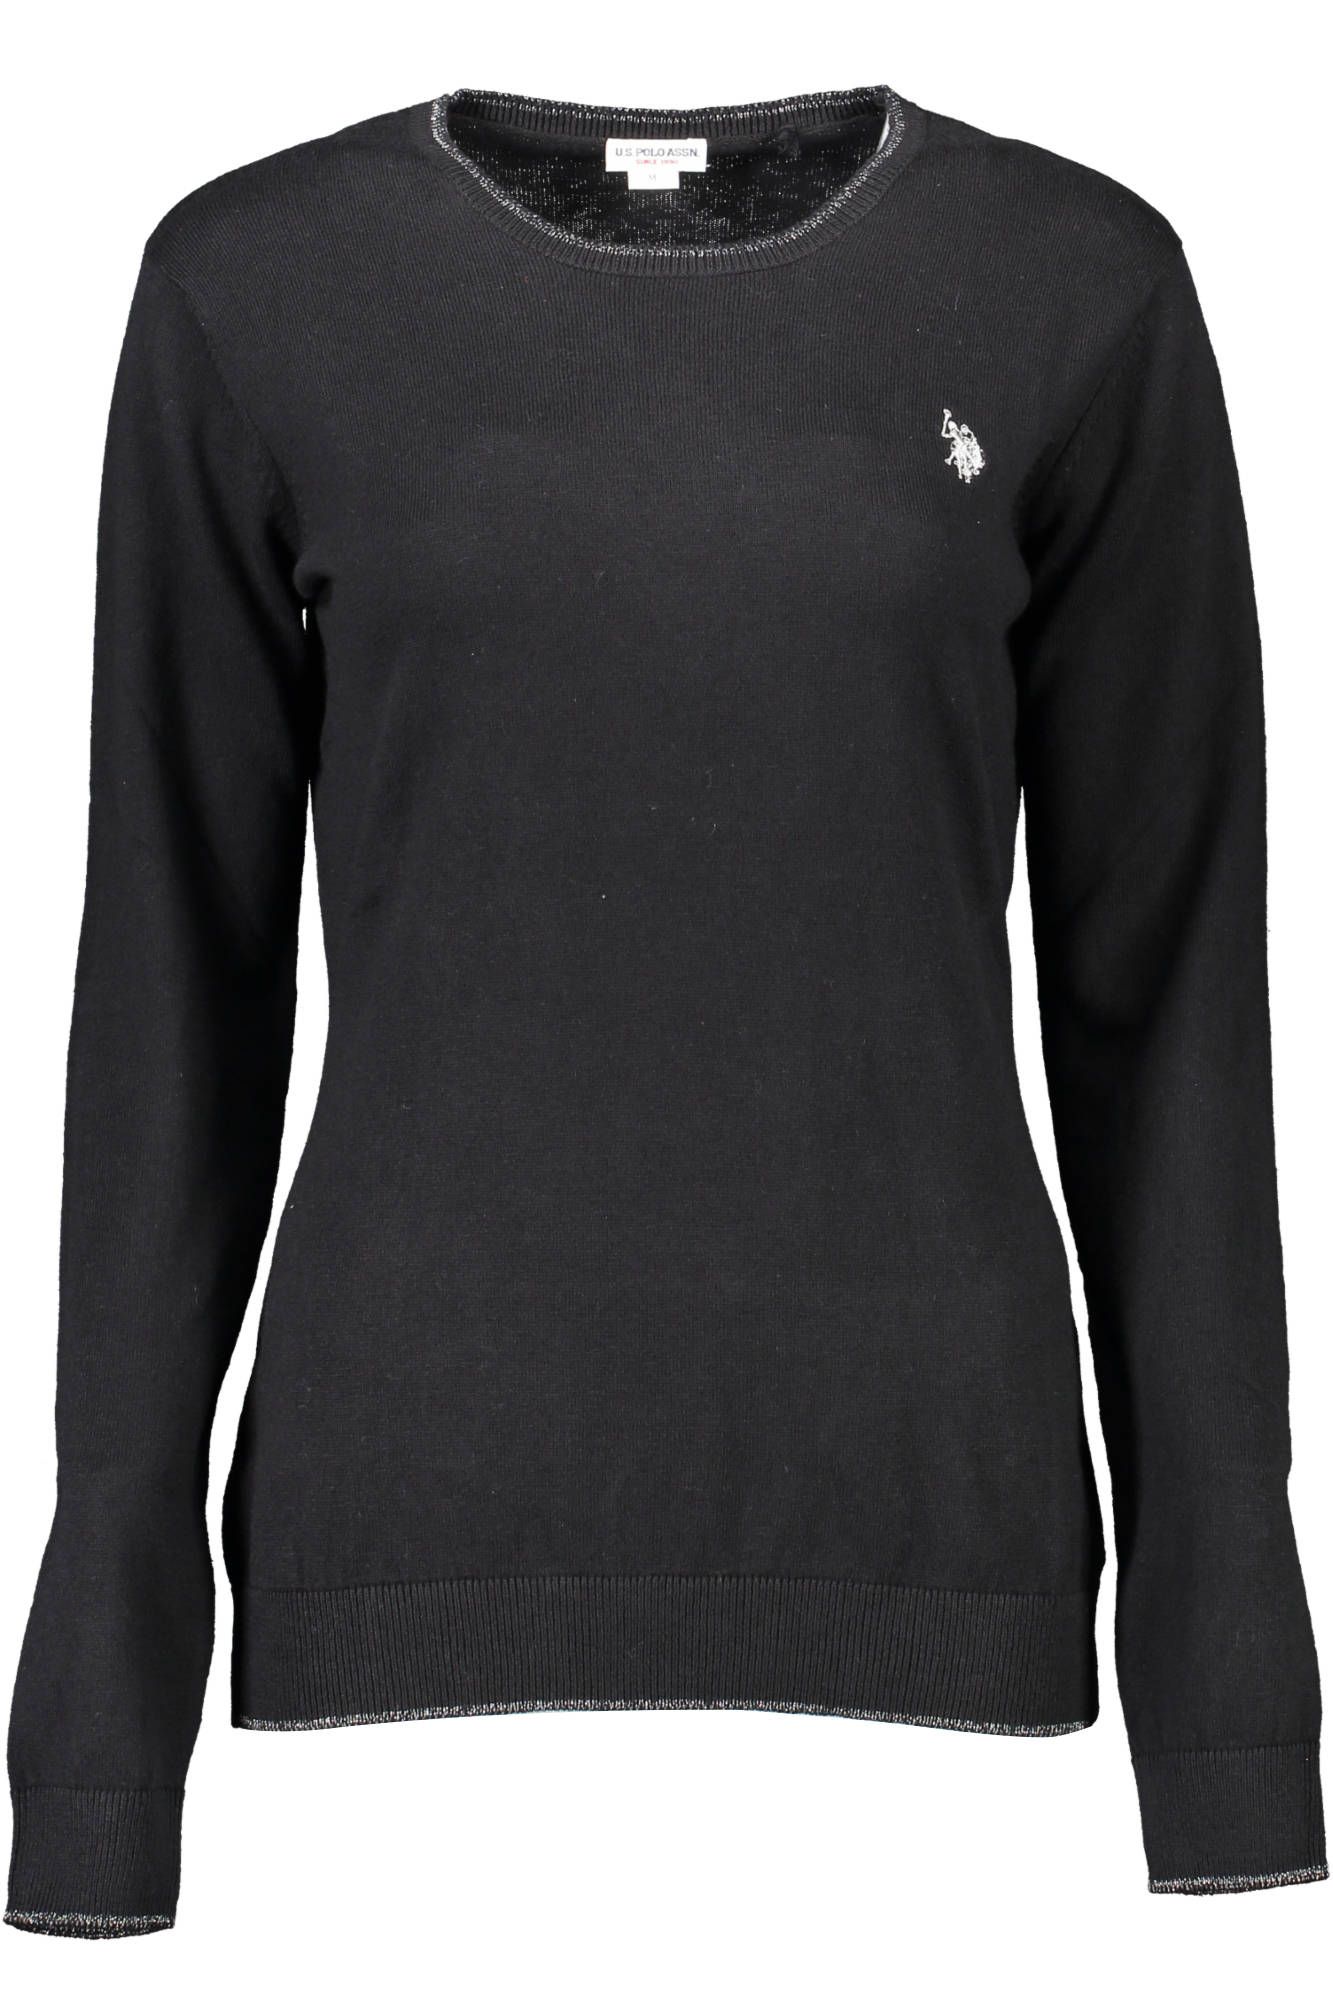 U.S. Polo Assn. Black Cotton Sweater